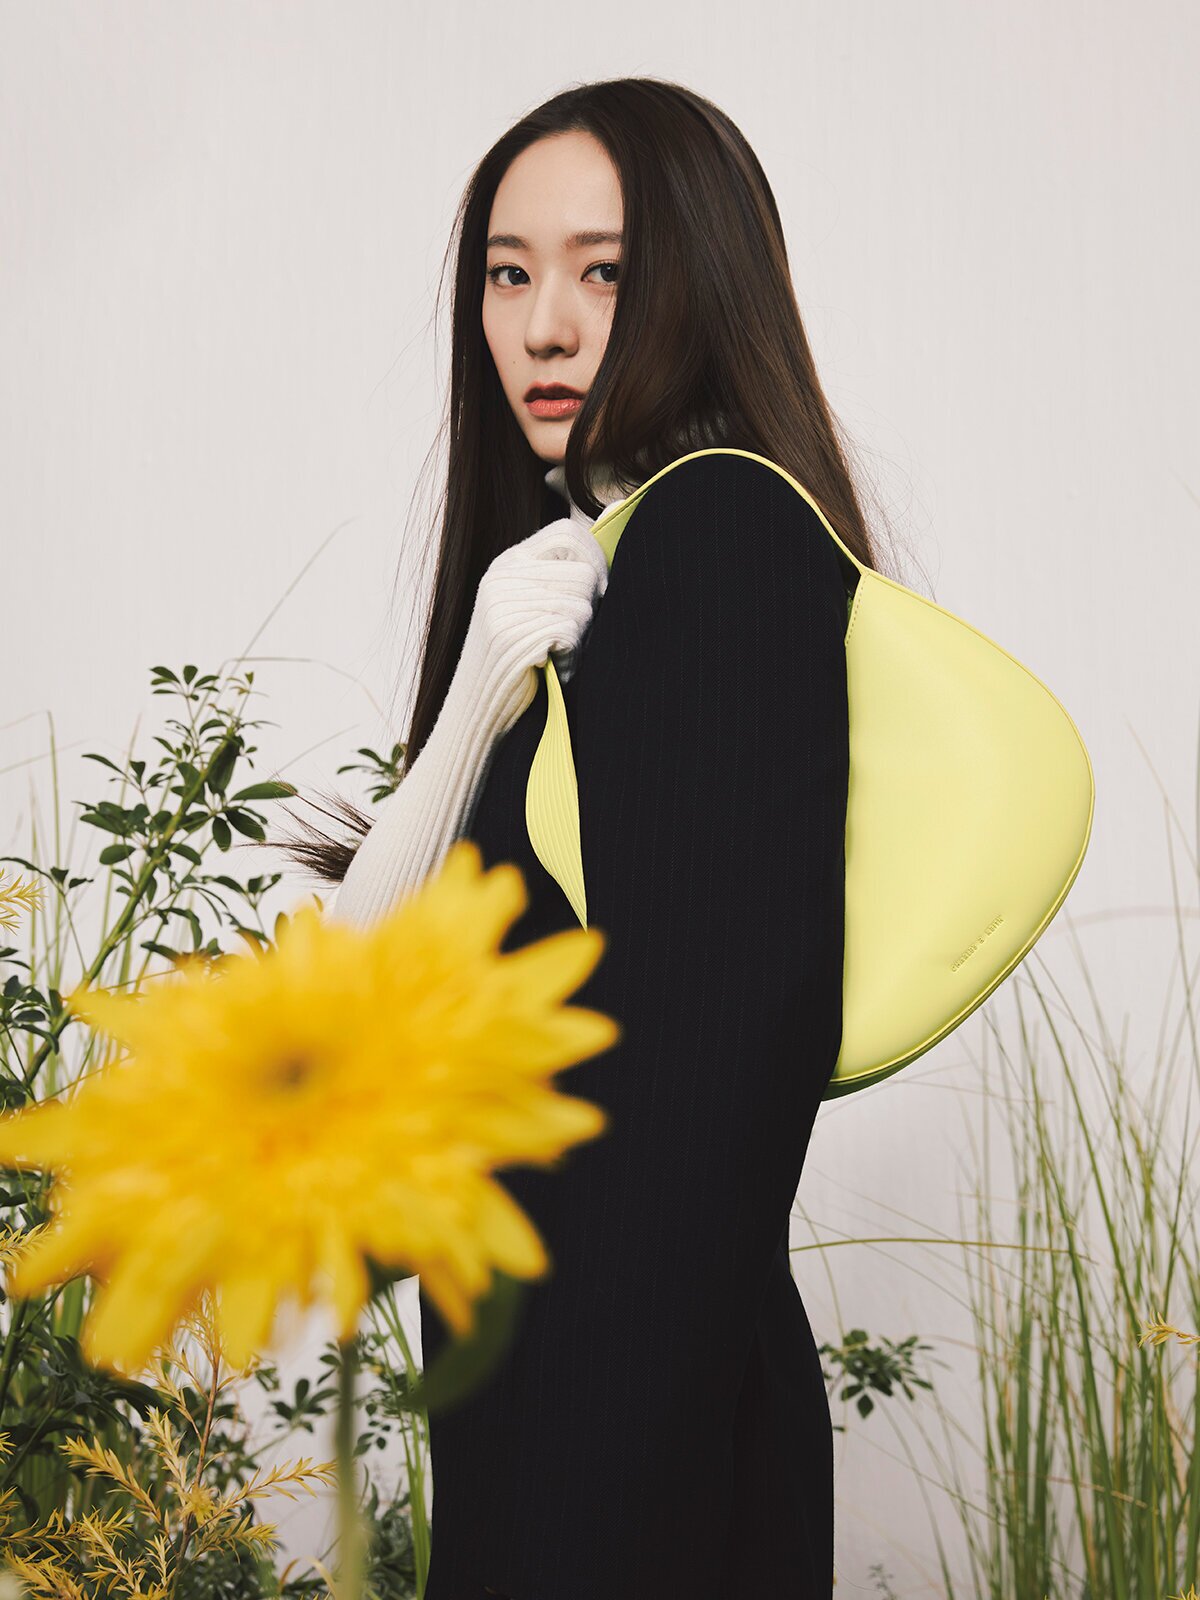 krystal jung photoshoot 2022